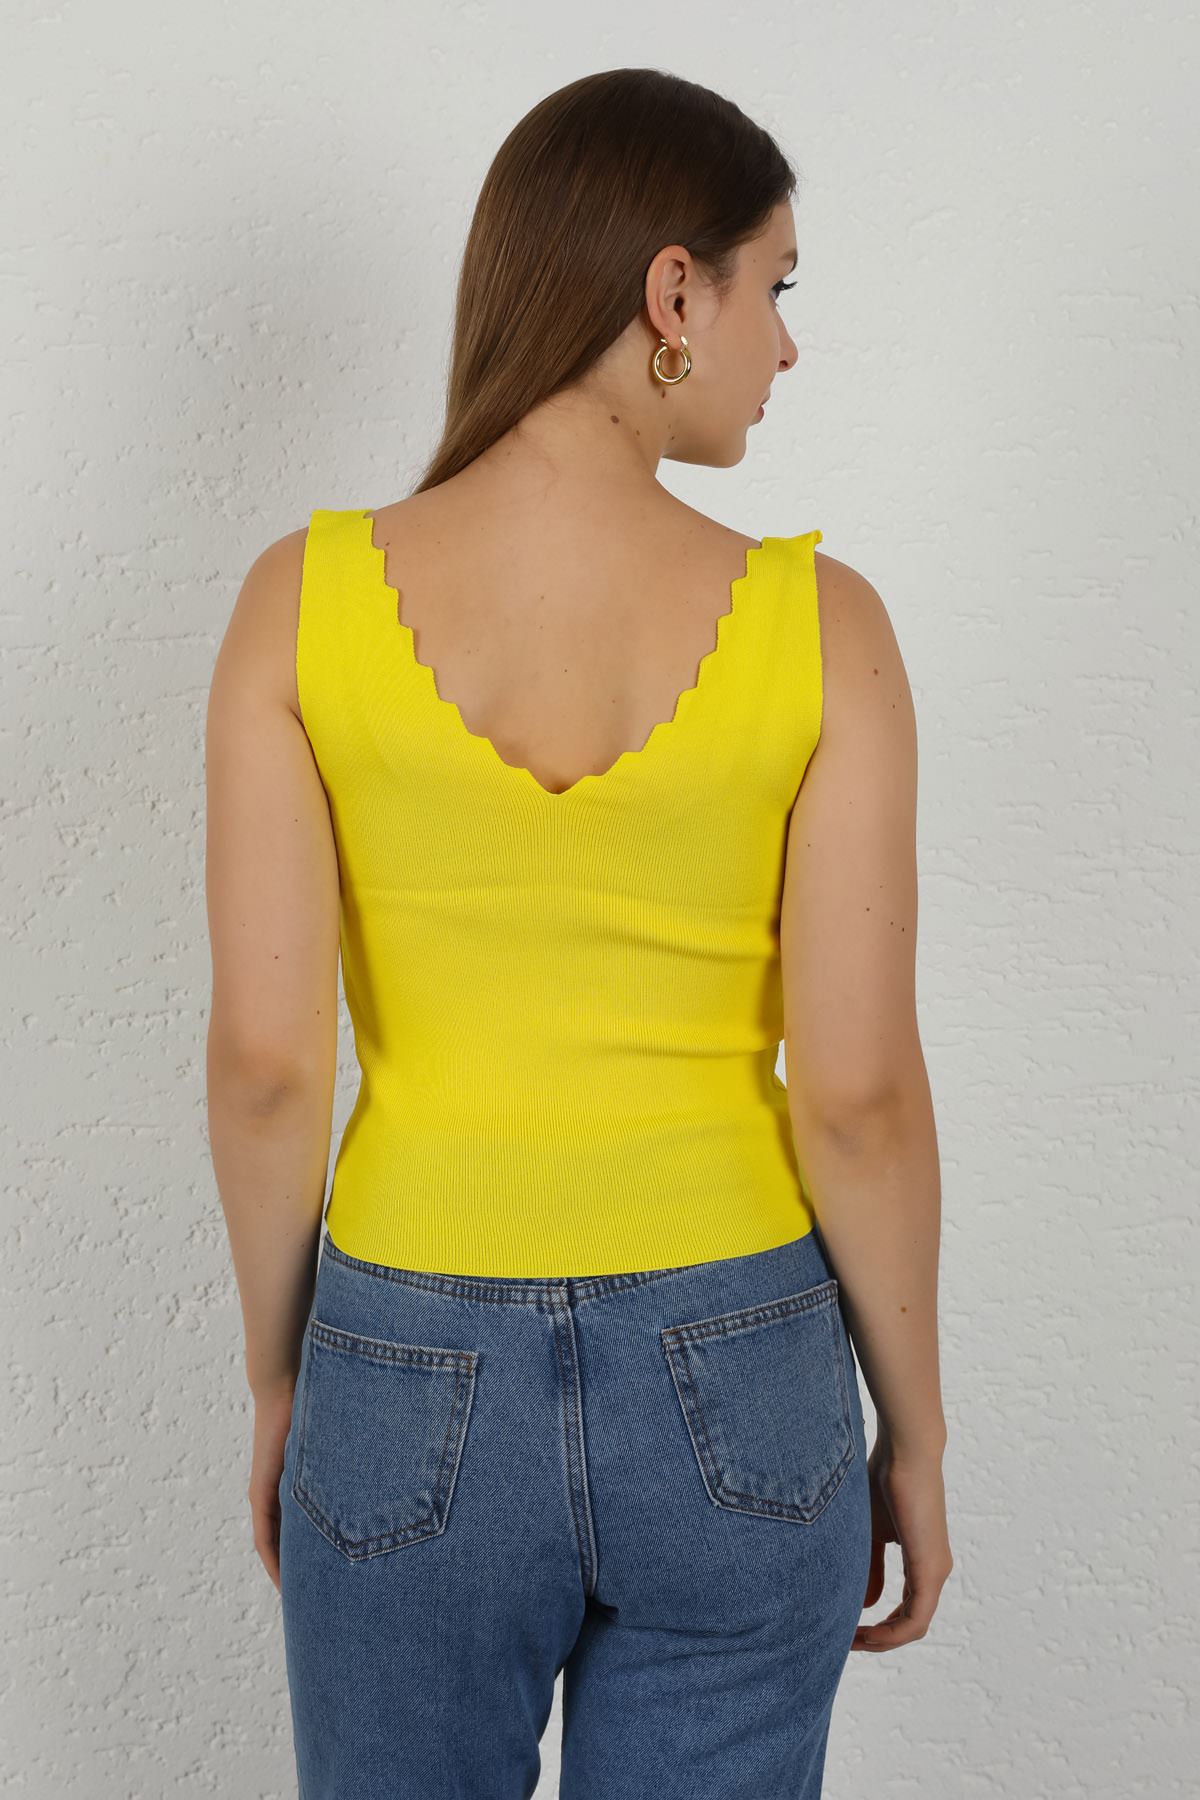 Triko Kumaş Taşlı Merdiven Yaka Kadın Bluz-Sarı